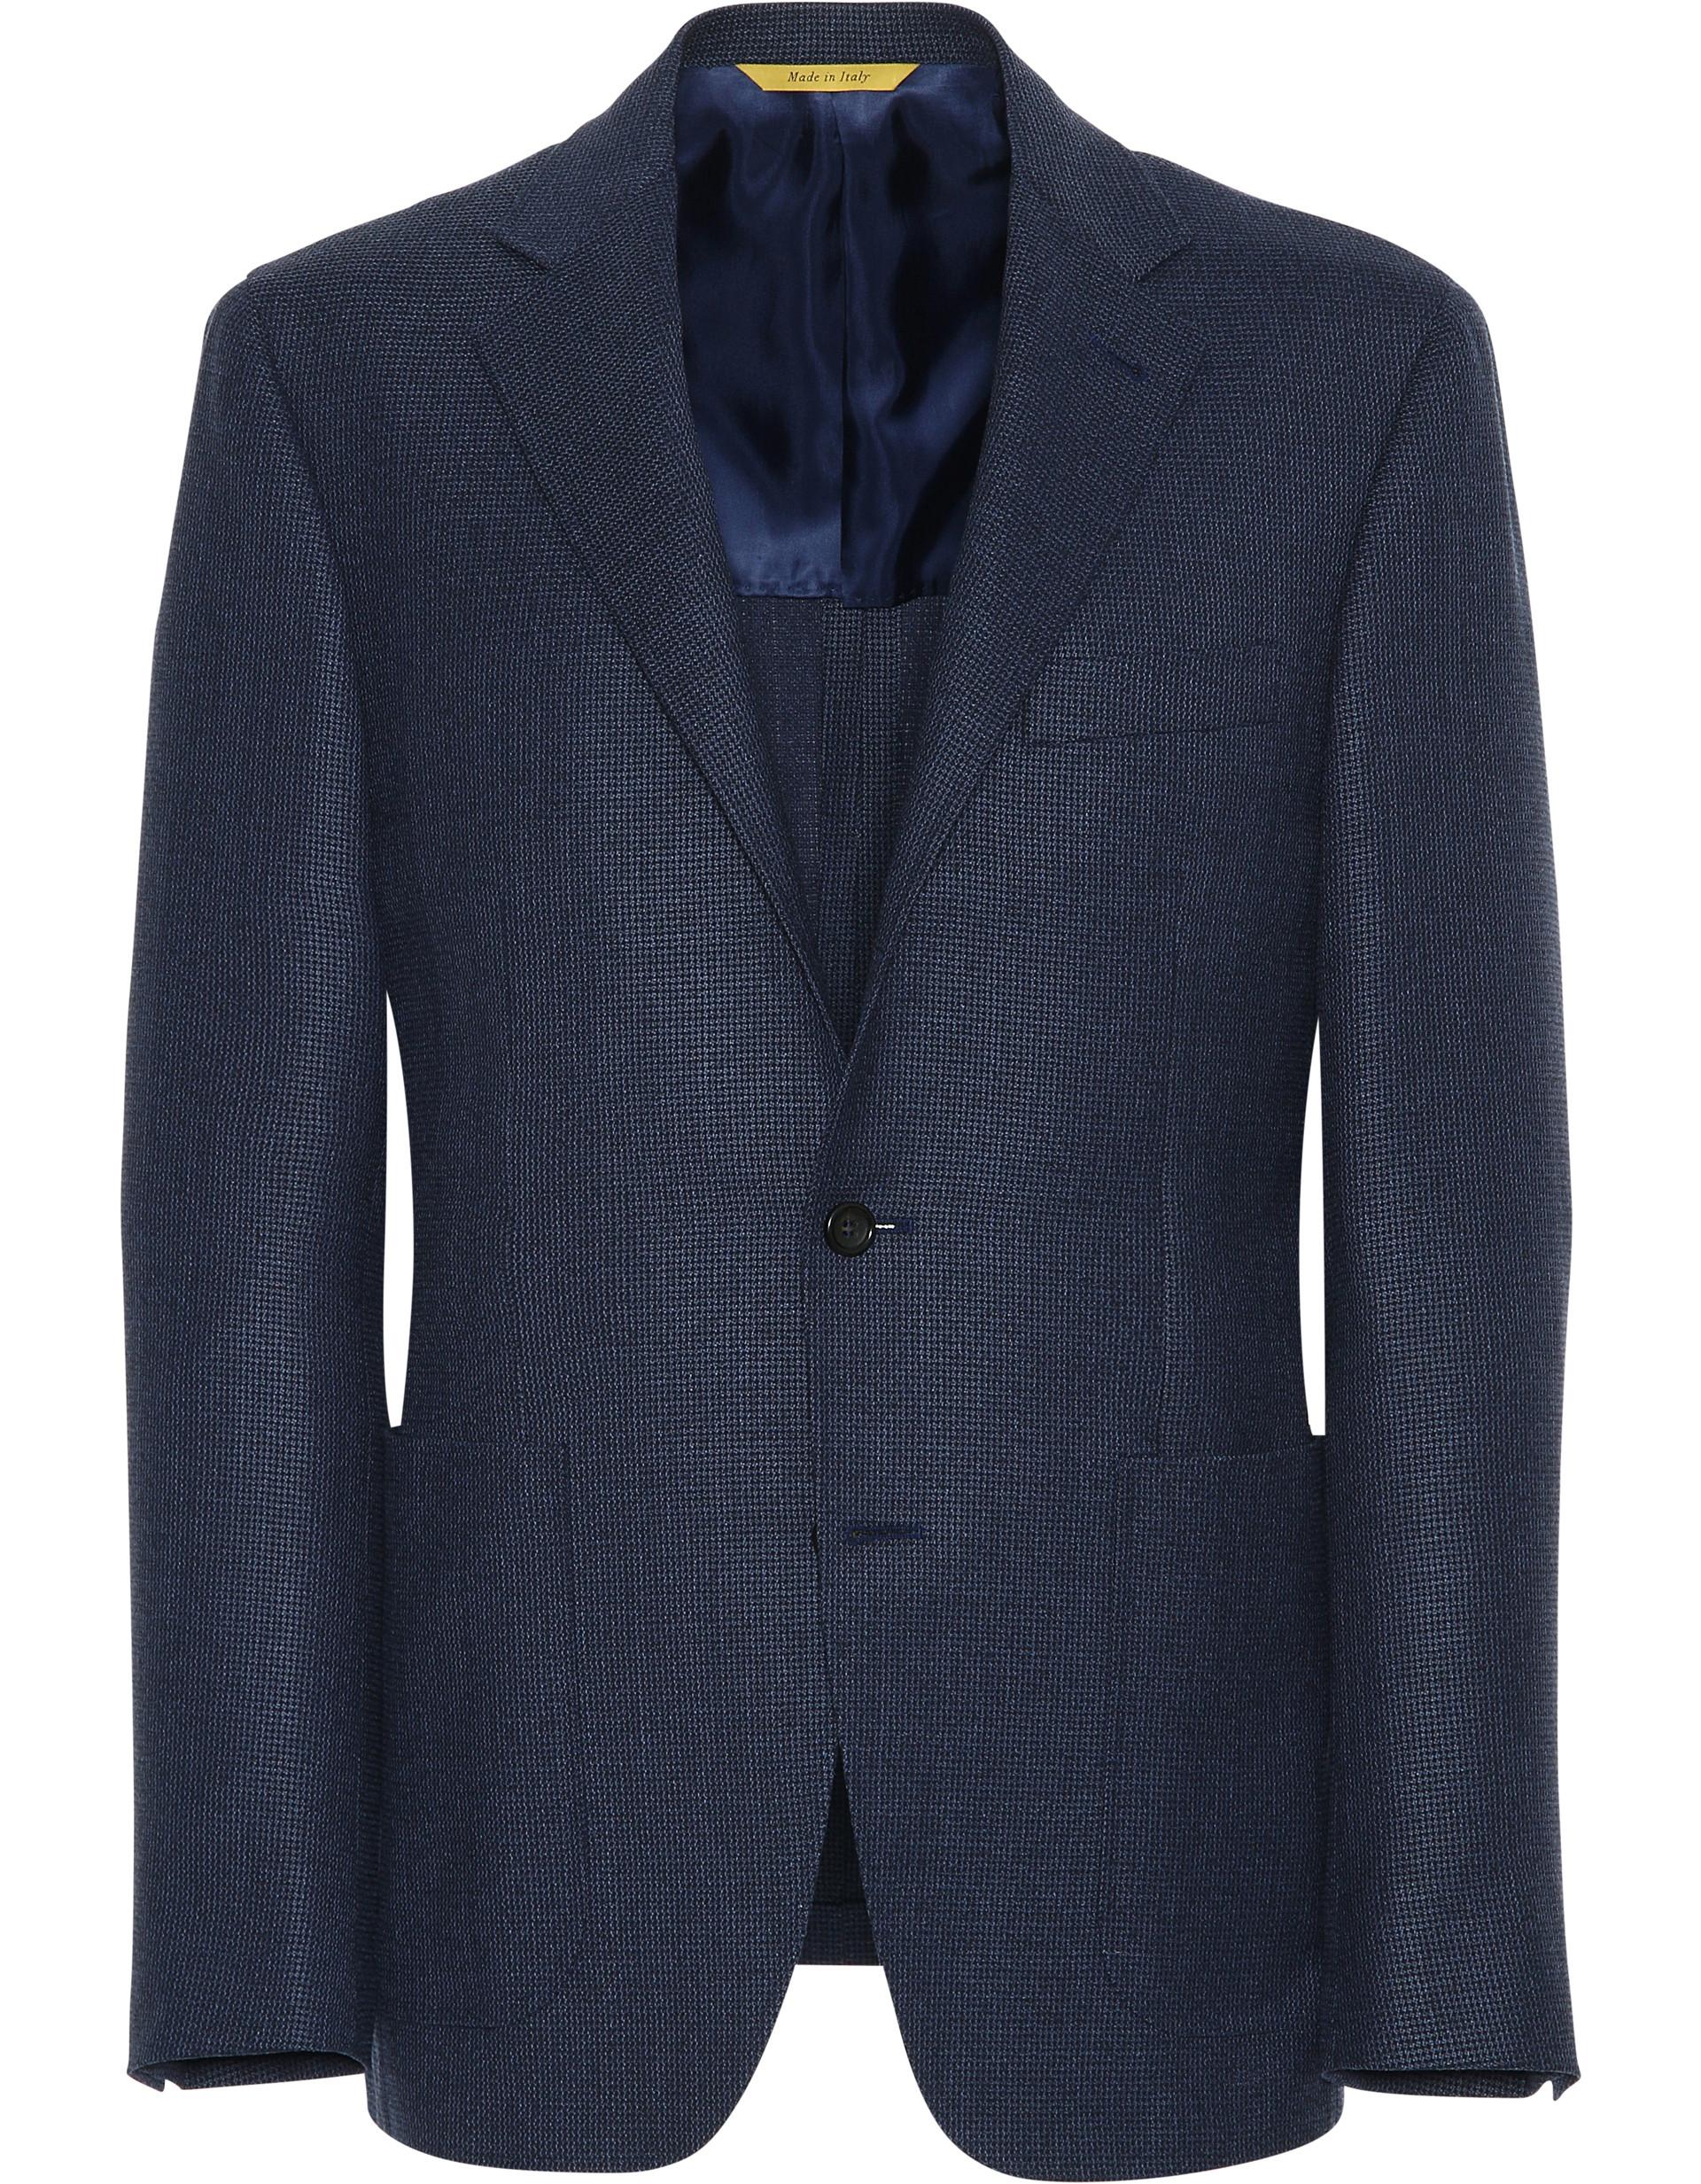 Lyst - Canali Classic Blue Kei Wool Blazer in Blue for Men